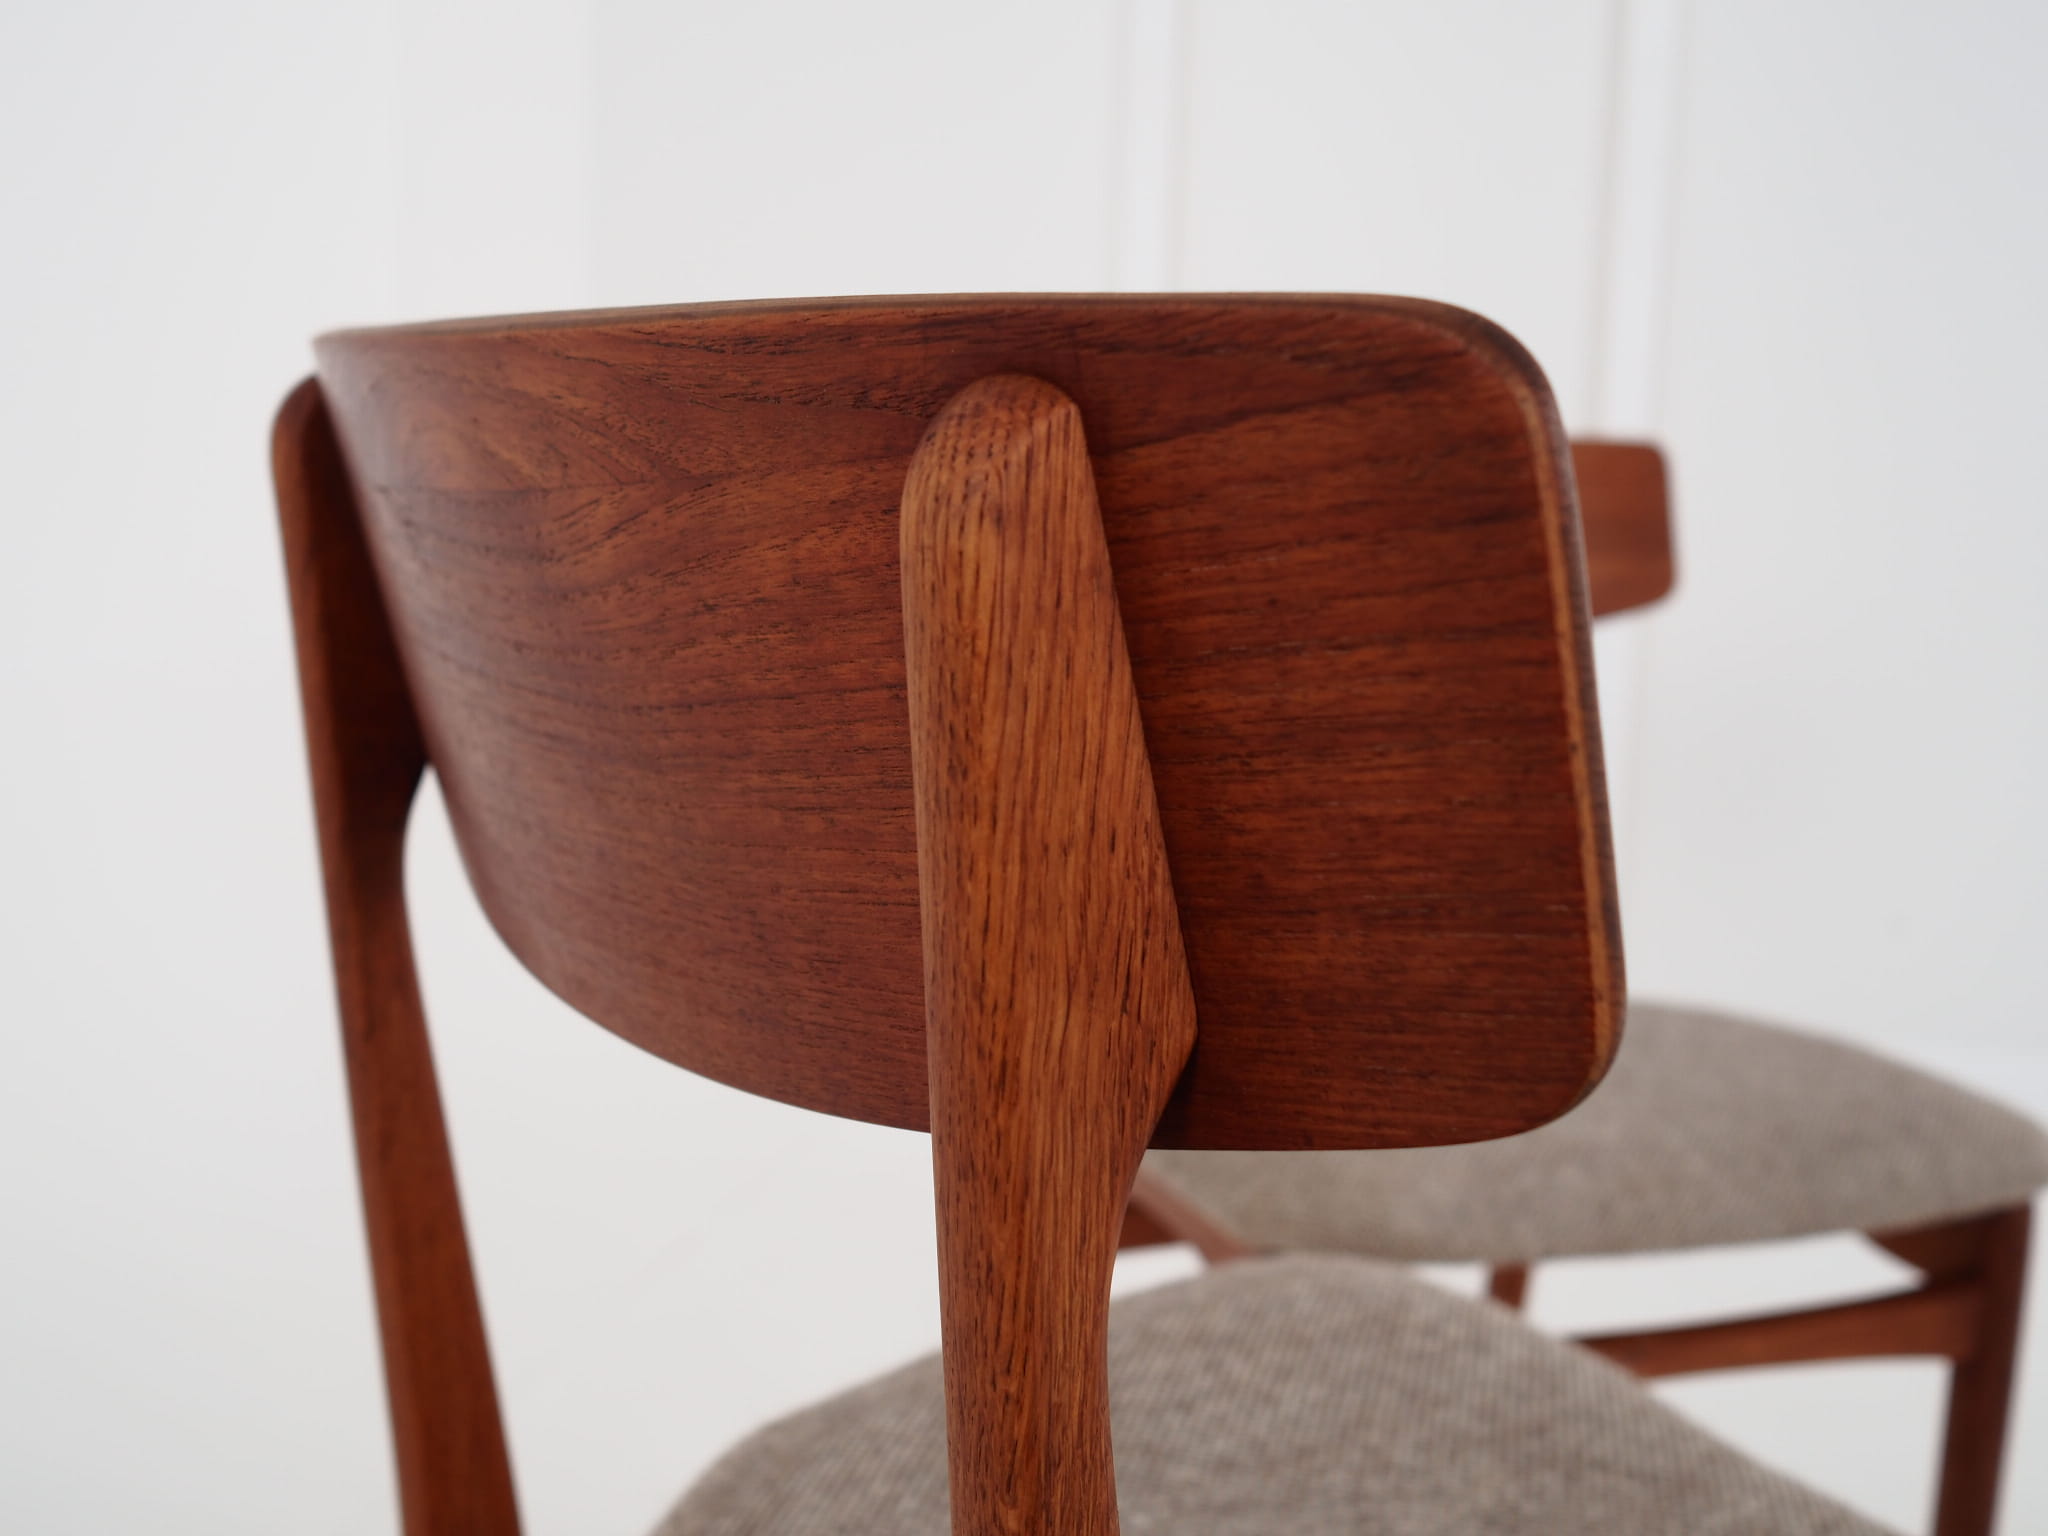 2x Vintage Stuhl Teakholz Textil Braun 1970er Jahre